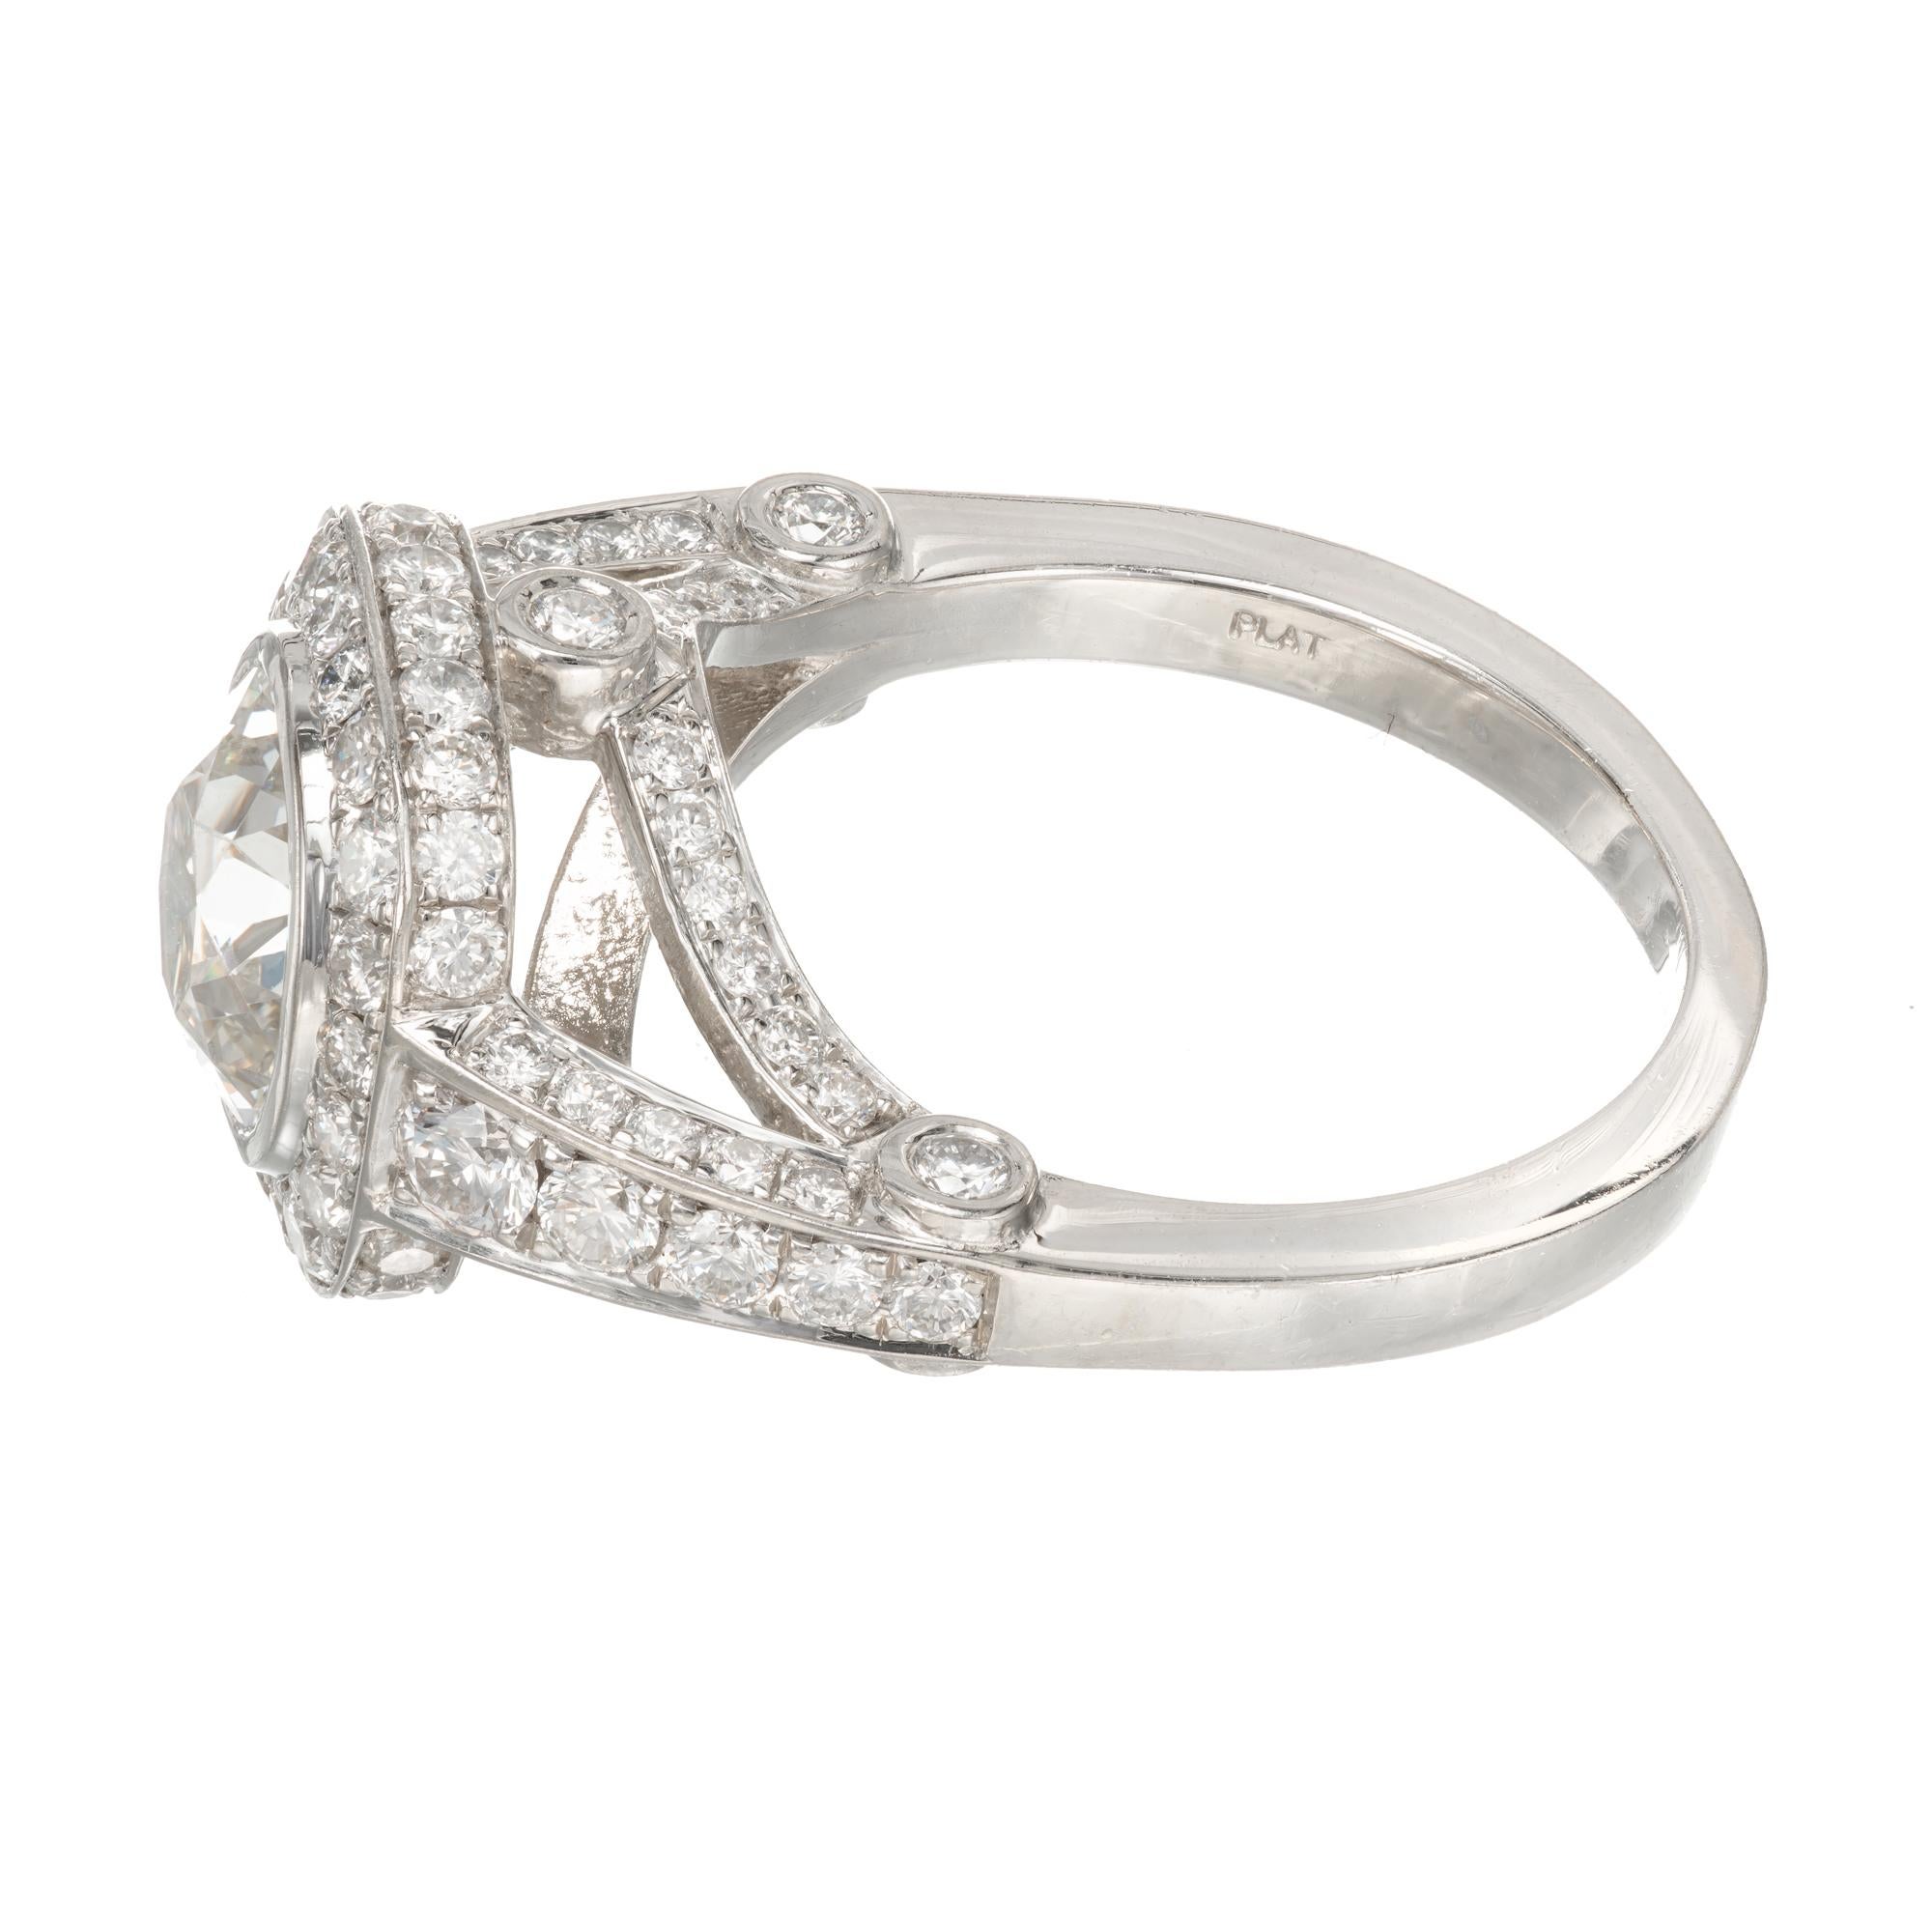 Peter Suchy 1.98 Carat Old European Cut Diamond Halo Platinum Engagement Ring For Sale 2